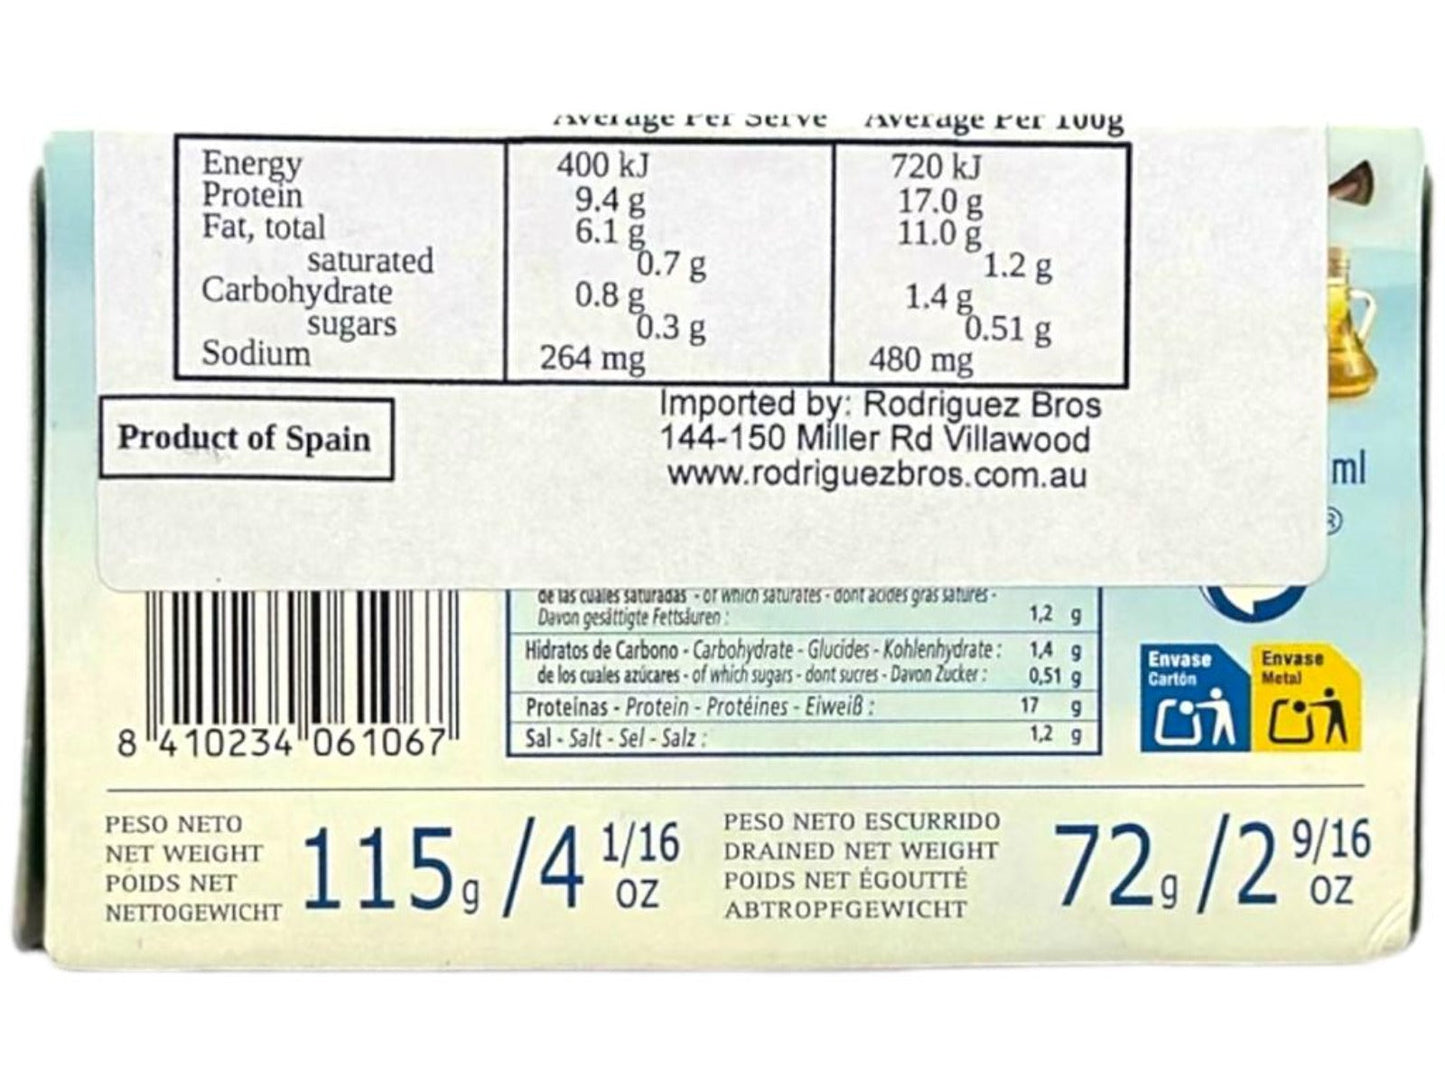 Vigilante Bacalao a la Vizcaina -Spanish Cod-Fish in Biscayan Sauce 115g - 4 Pack 460g Total